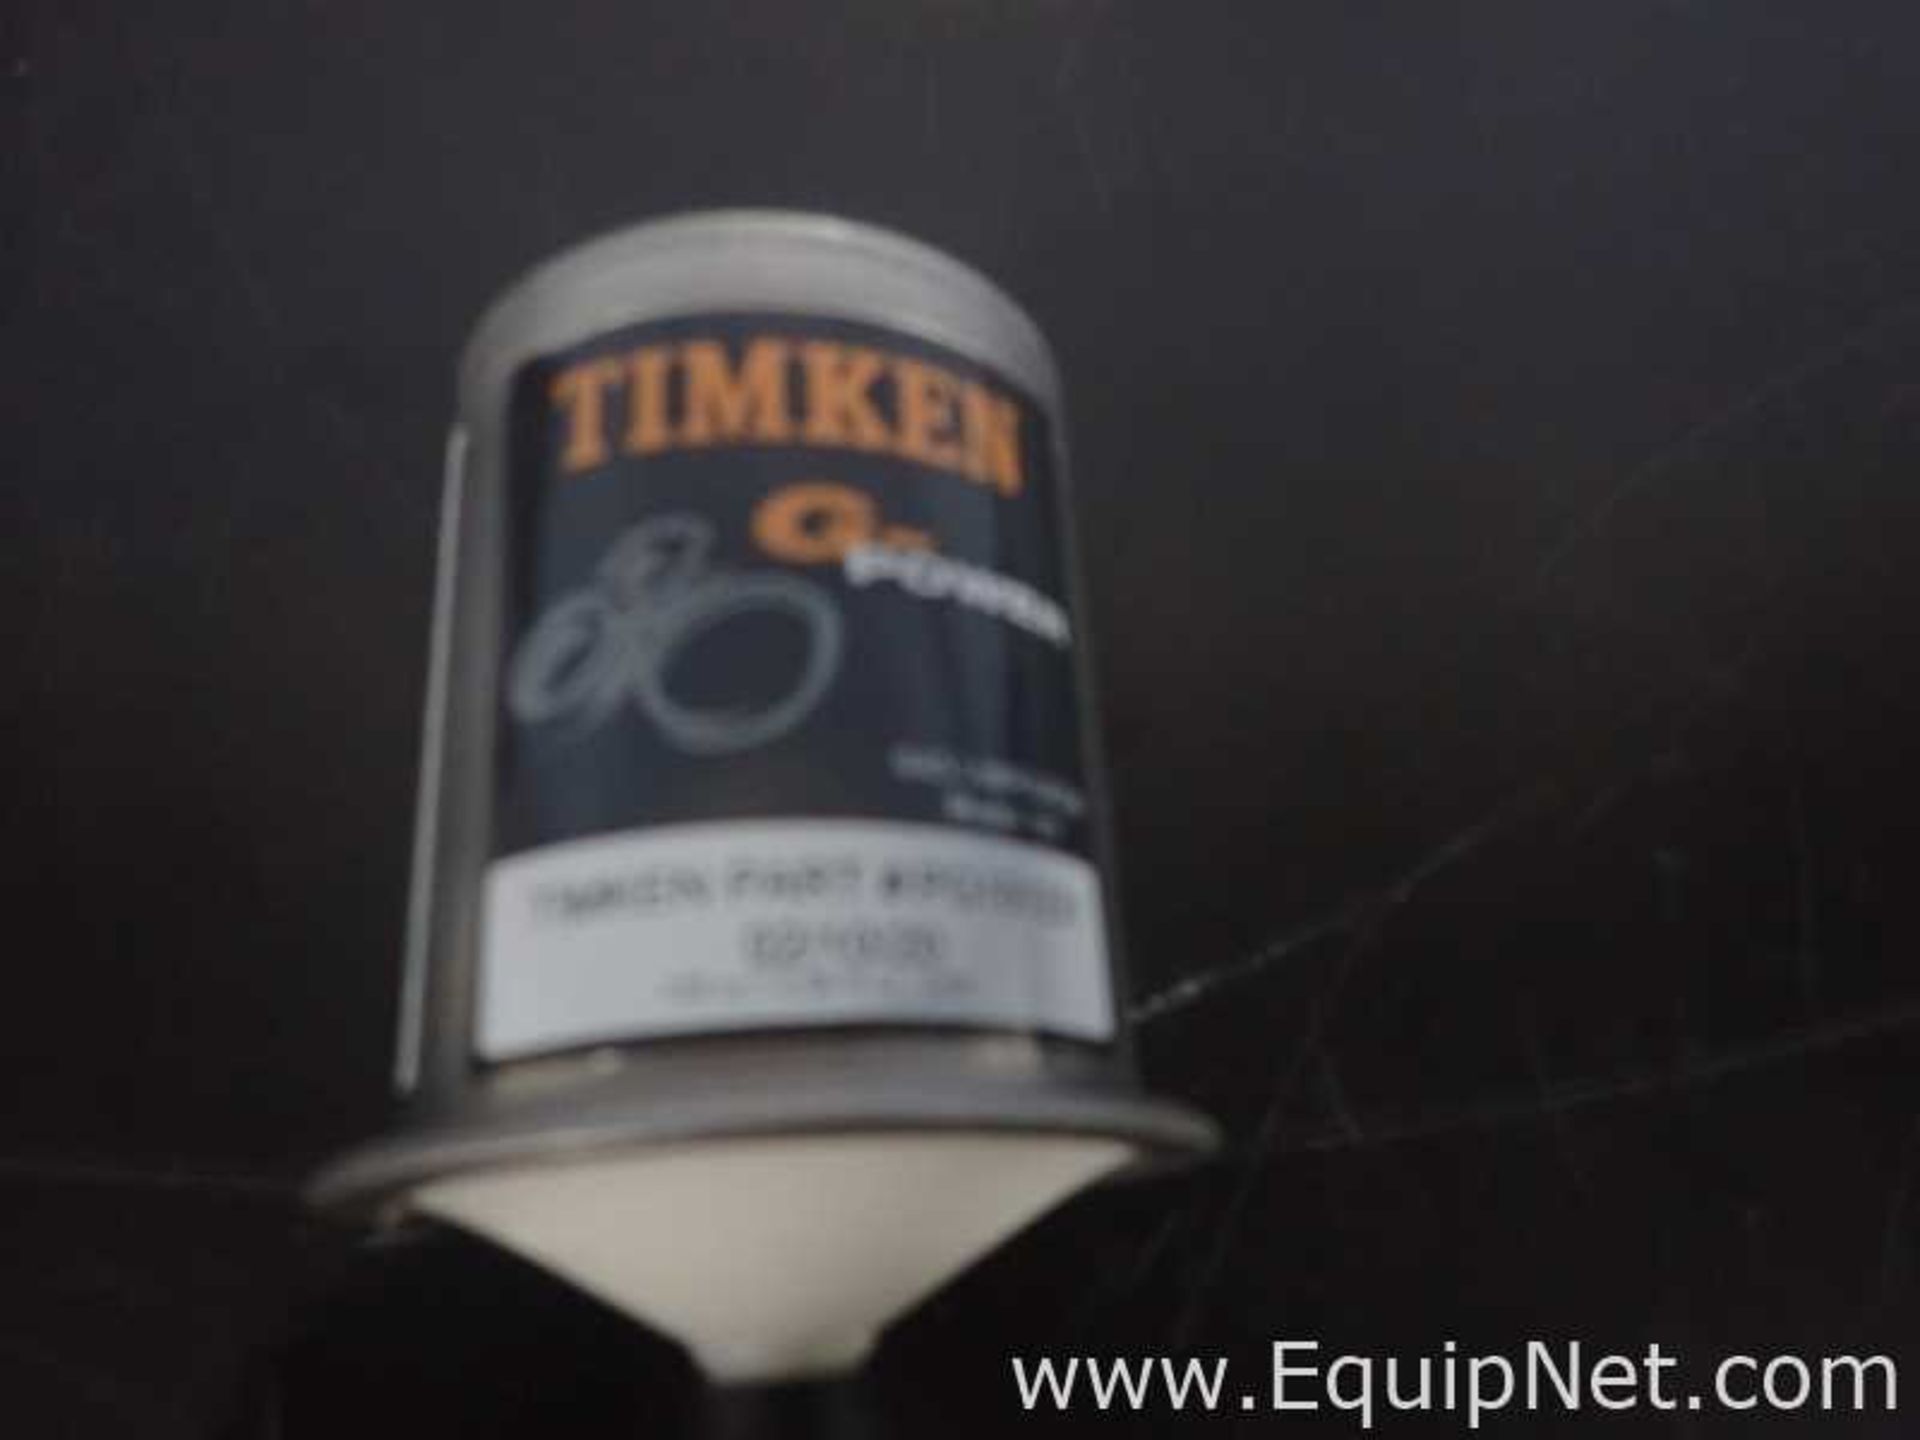 Timken 101 G-Power Gas Lubricators